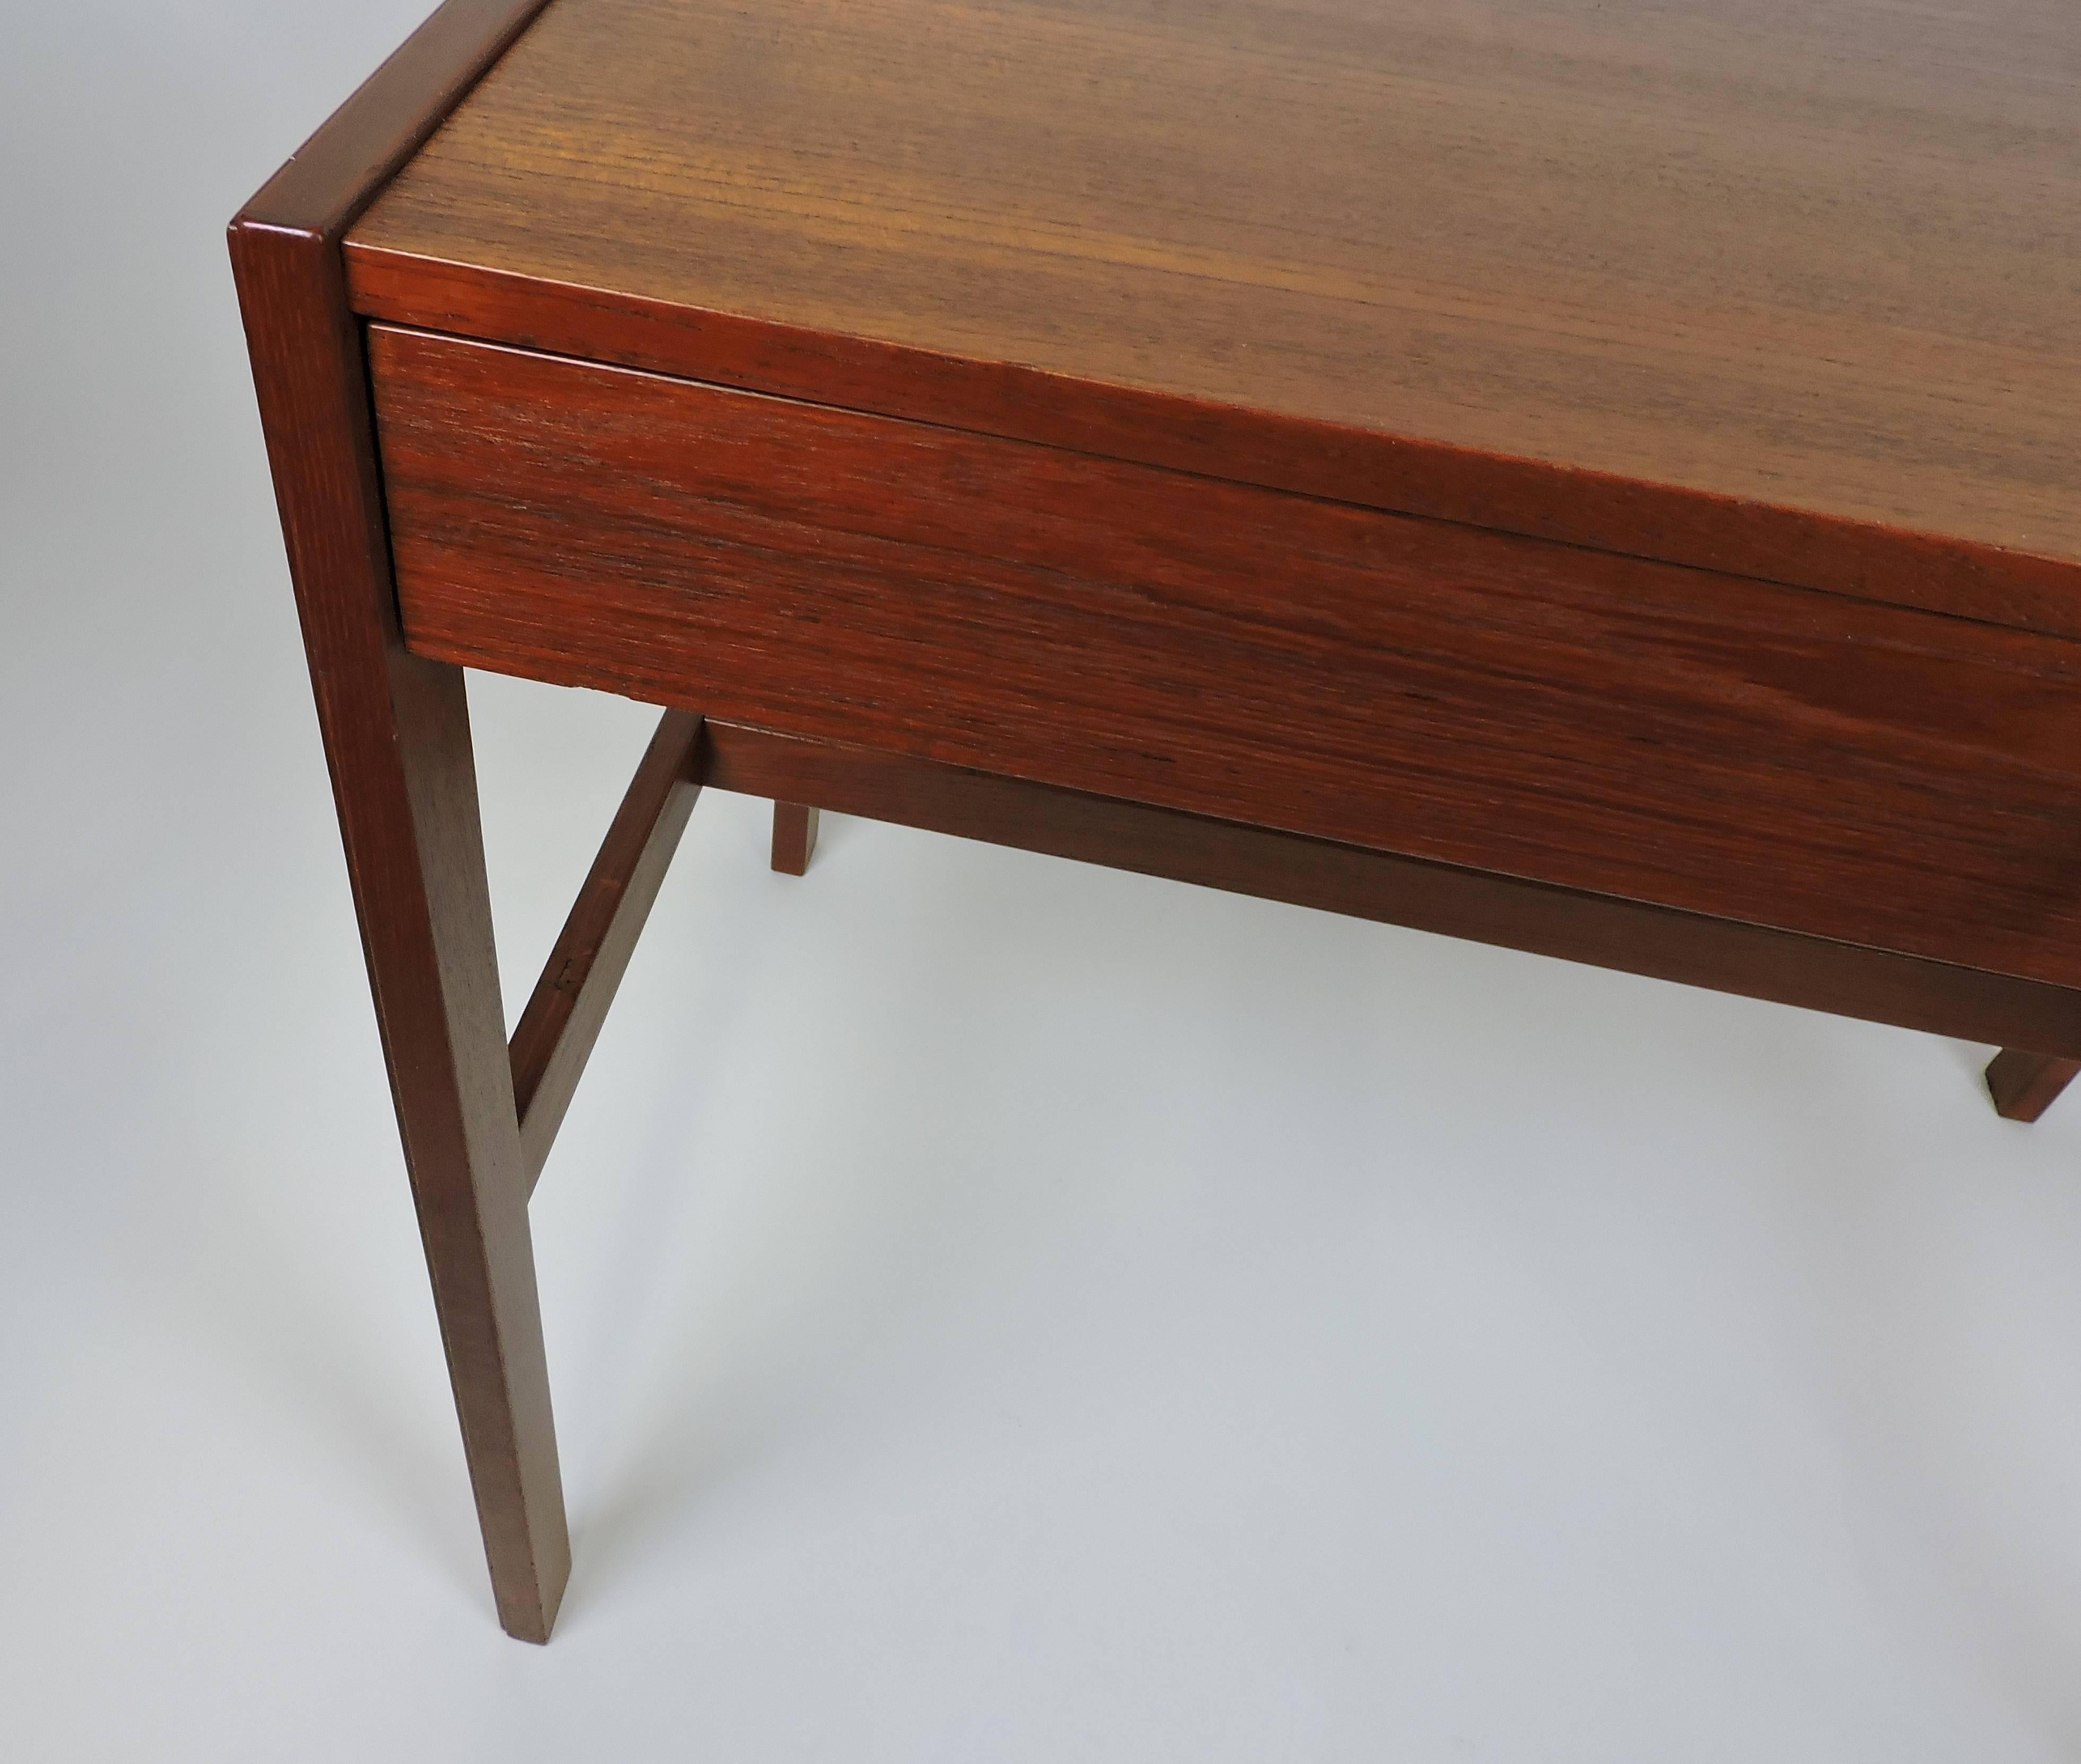 Arne Wahl Iversen Danish Modern Teak Desk or Vanity Table, Model 82 1